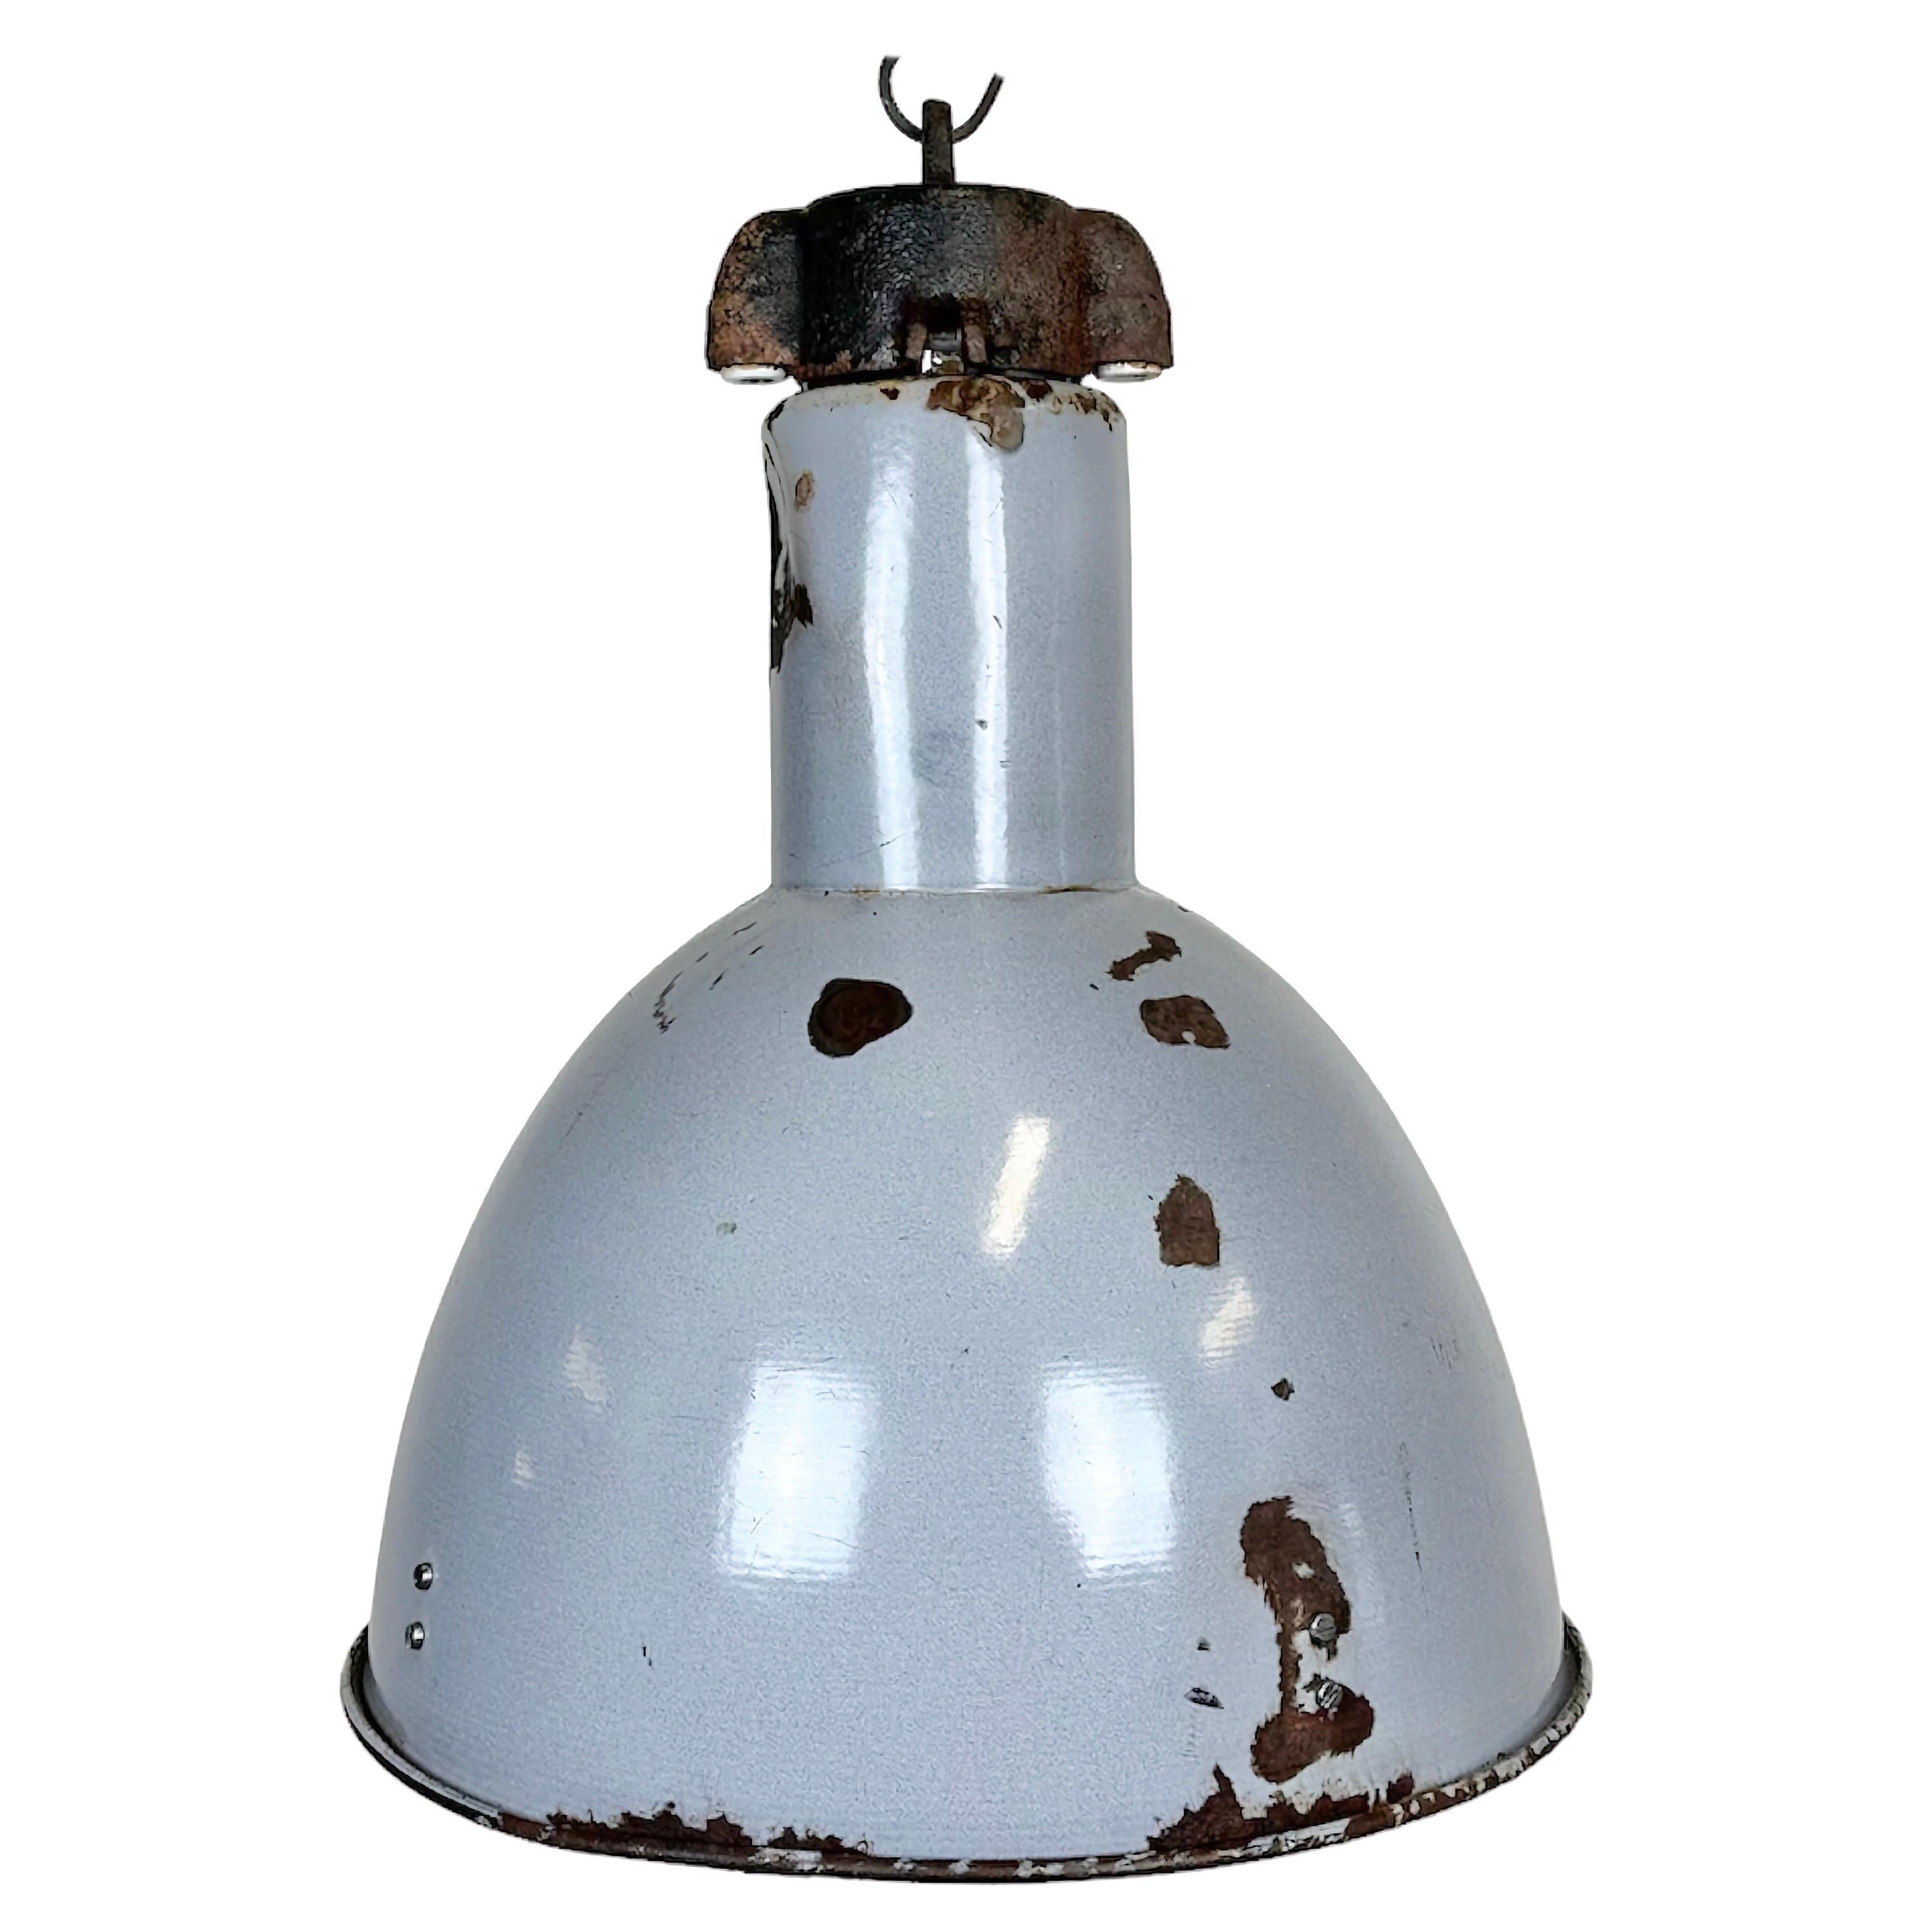 Bauhaus Grey Enamel Industrial Pendant Lamp, 1950s